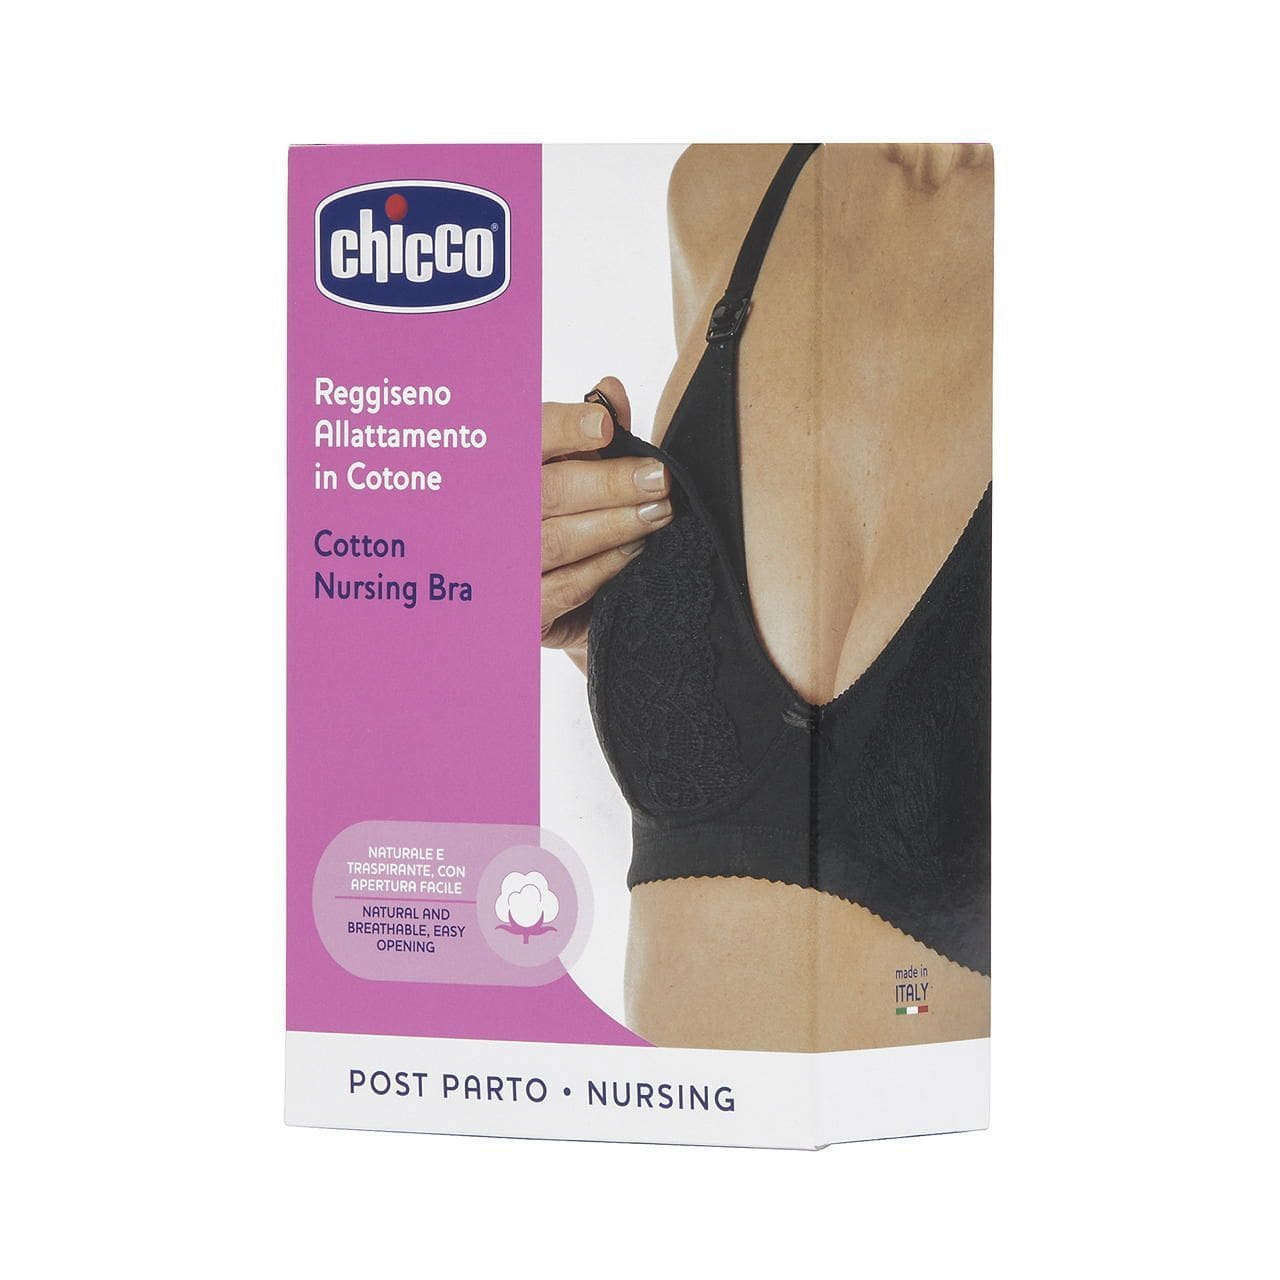 Black cotton nursing bra from Chicco